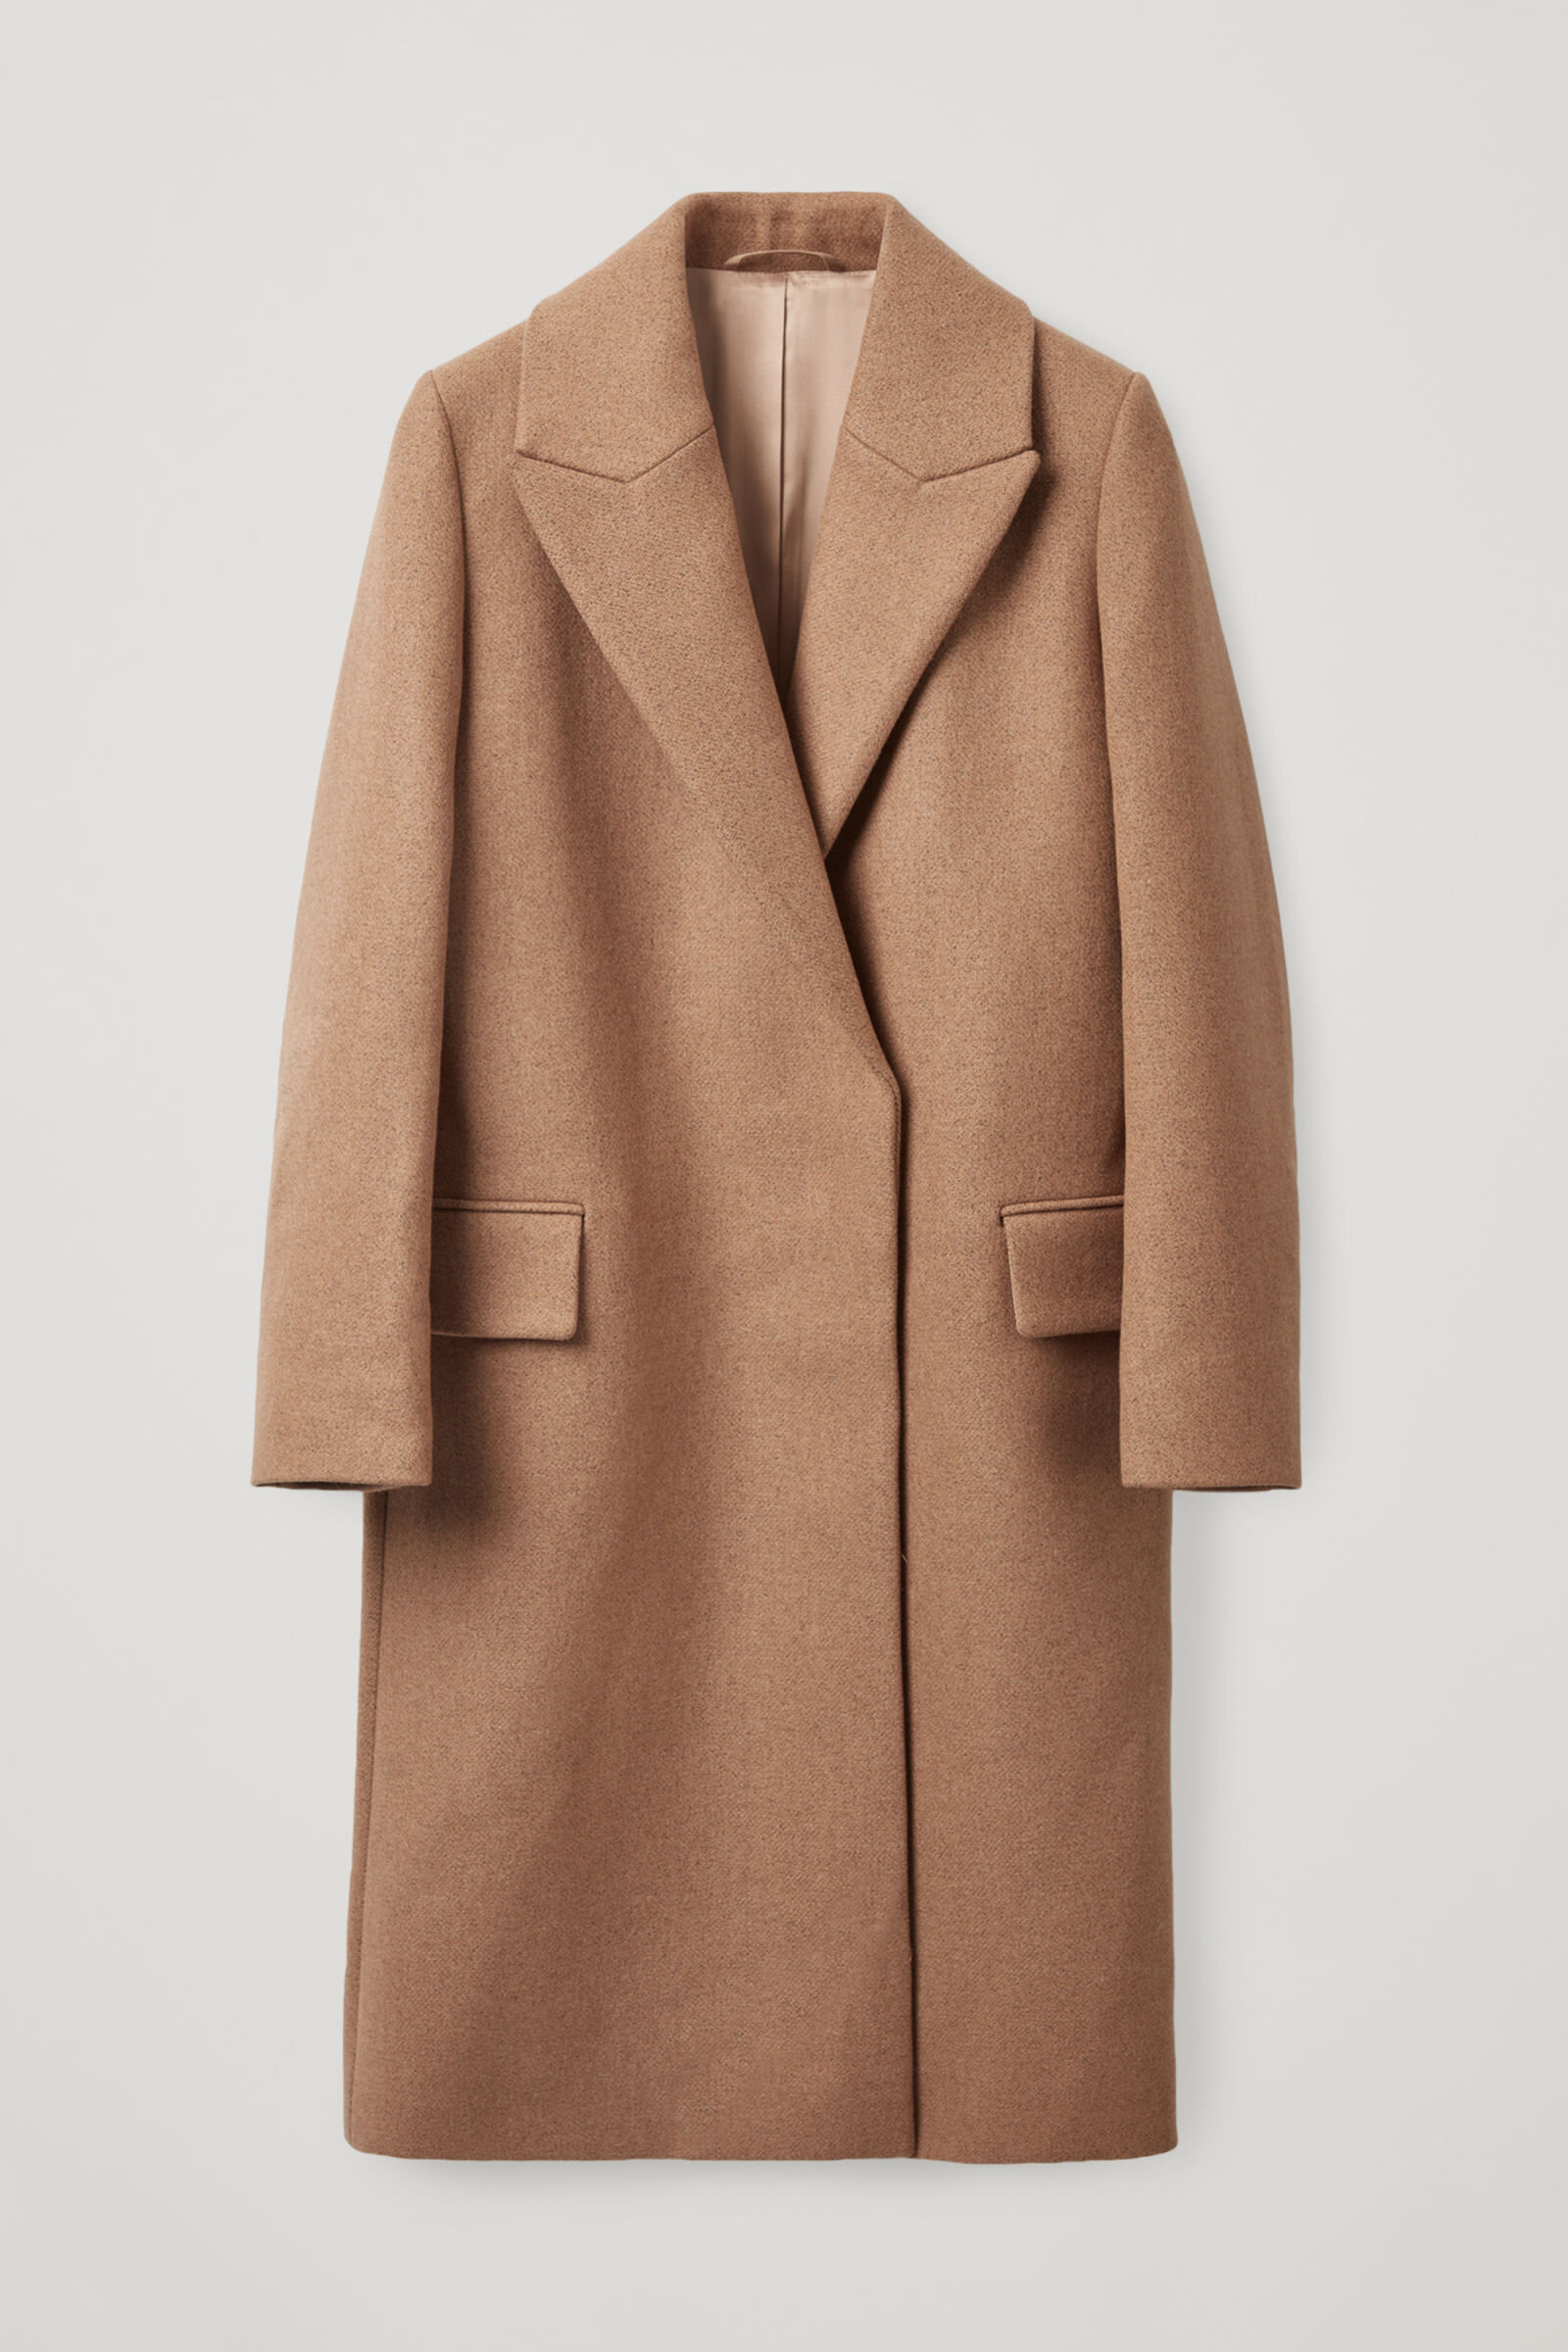 Coat, £180, COS